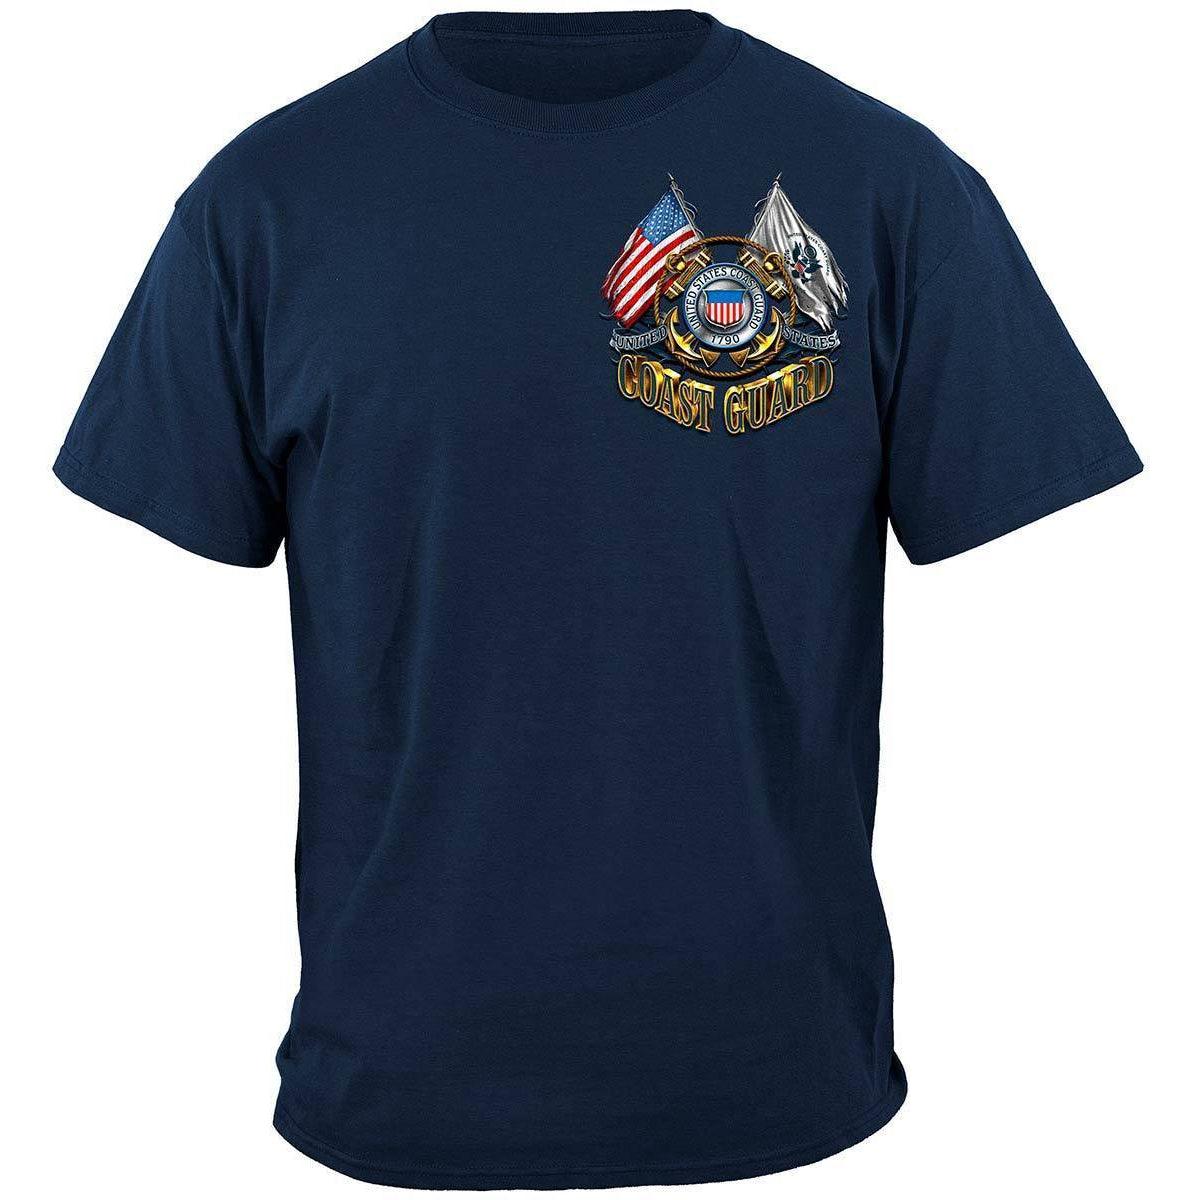 Coast Guard Double Flag T-Shirt - Military Republic